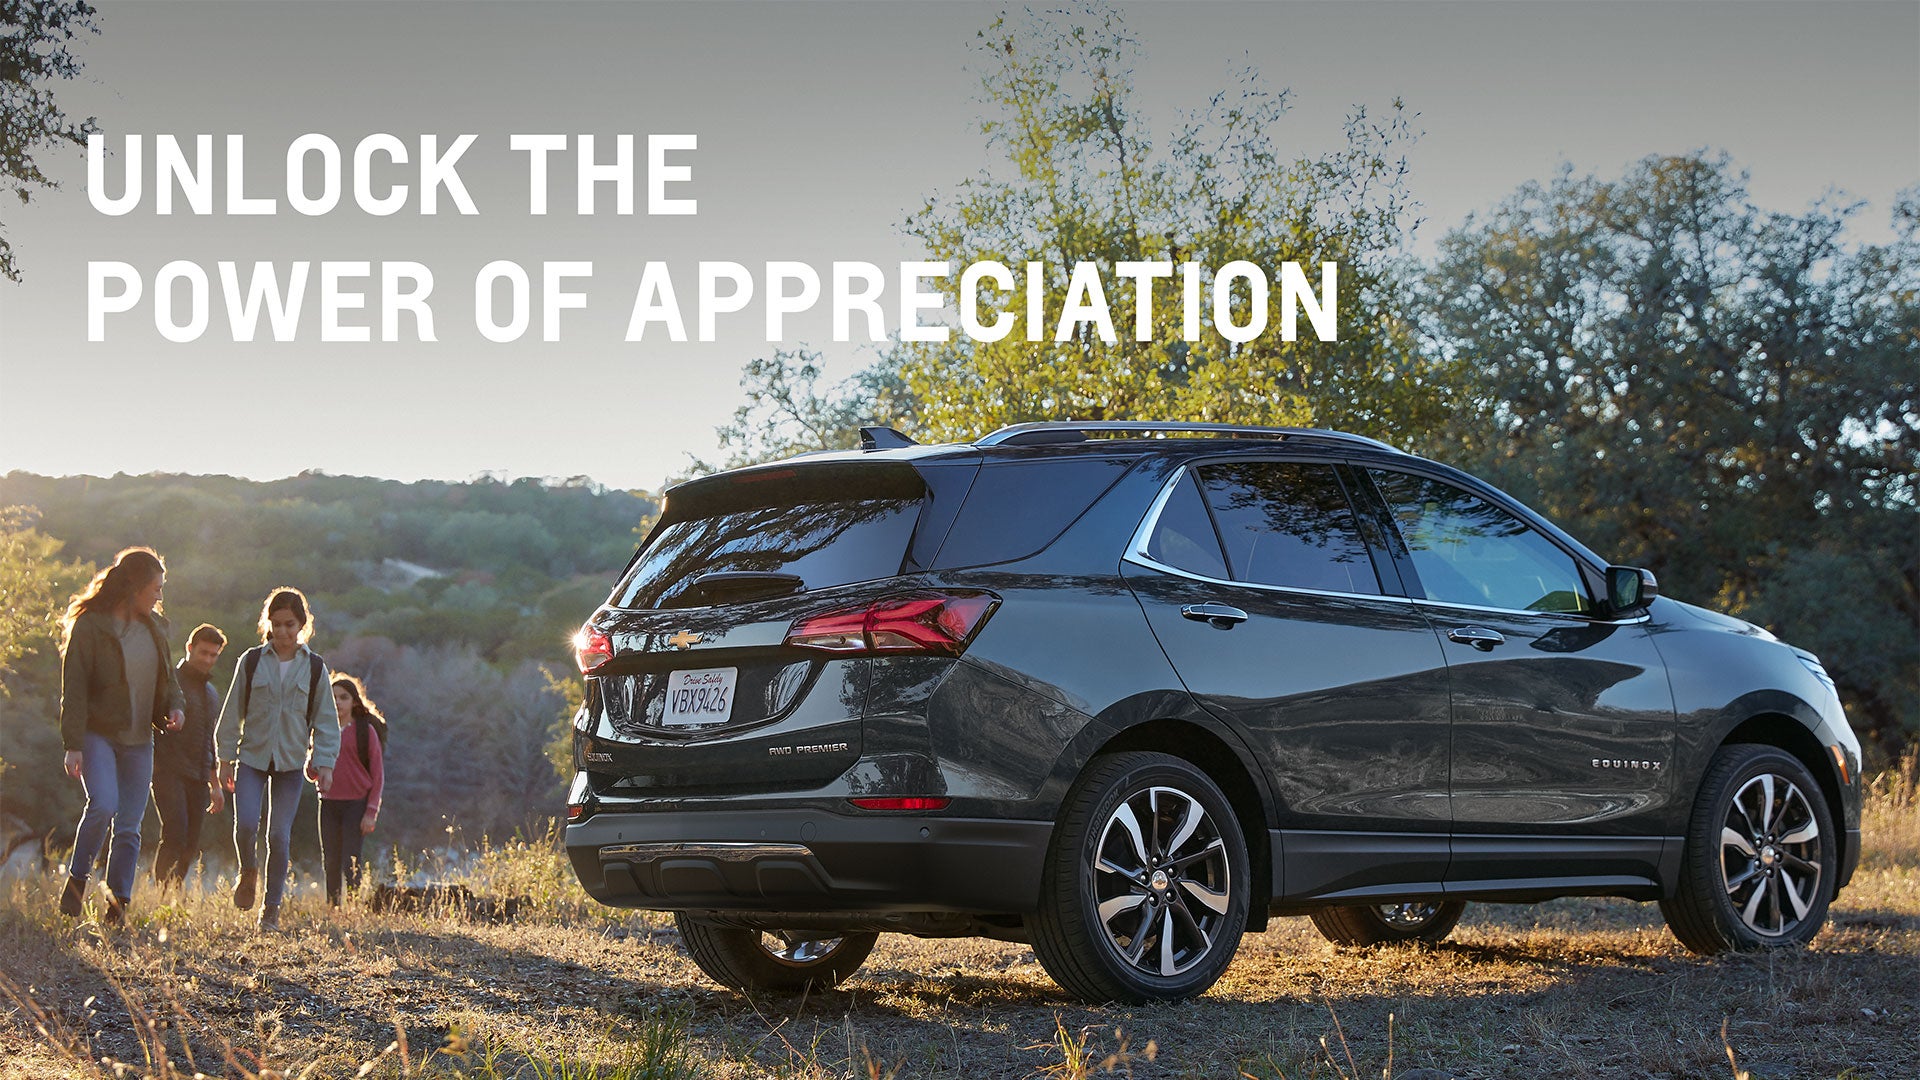 Unlock the power of appreciation | Chevrolet of New Bern in NEW BERN NC